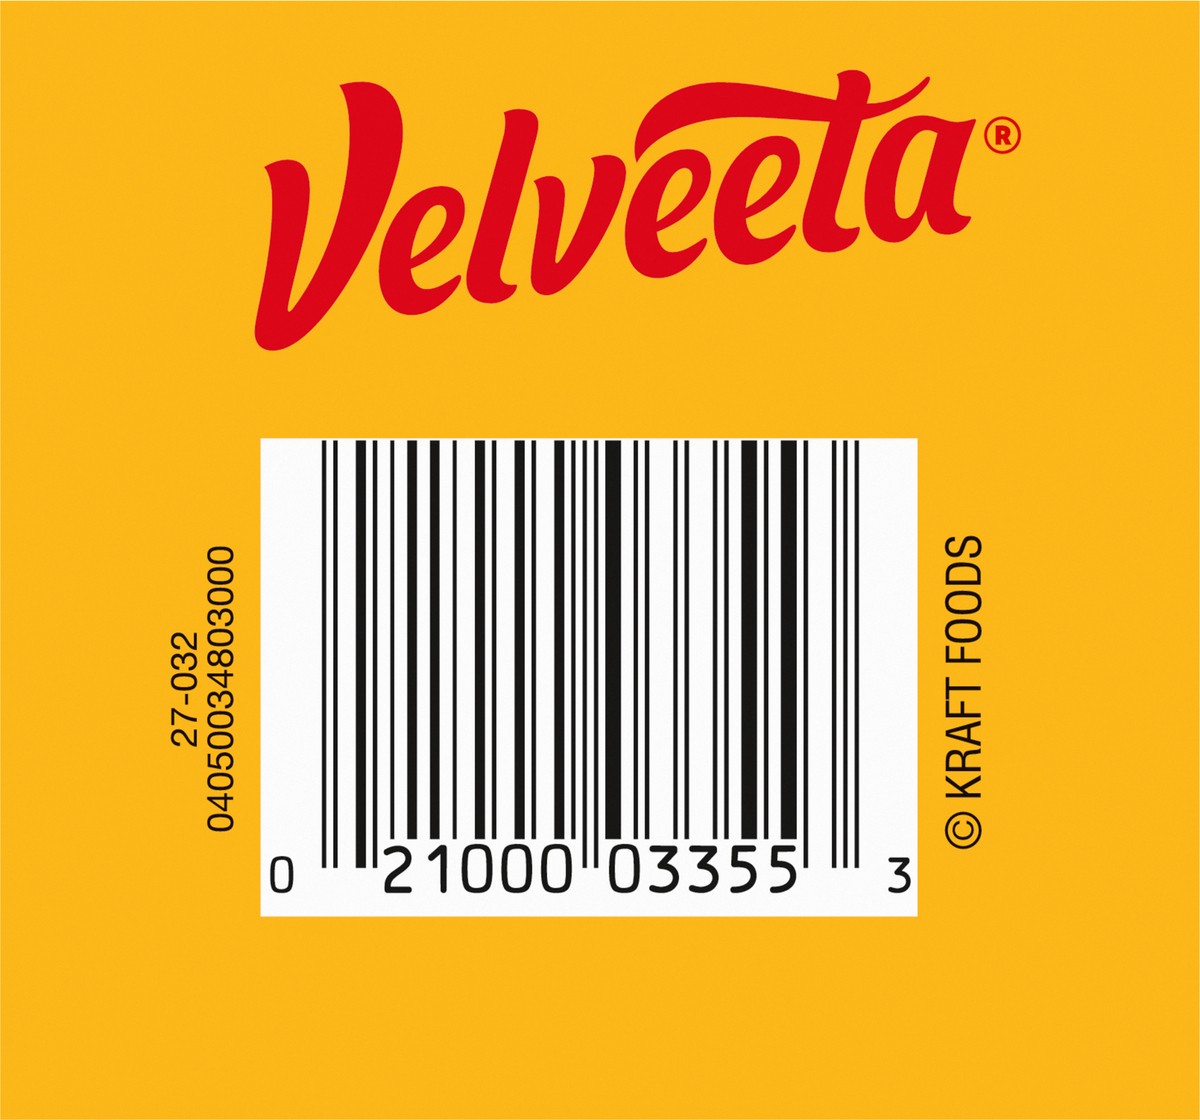 slide 3 of 9, Velveeta Queso Blanco Pasteurized Recipe Cheese Product, 32 oz Block, 32 oz